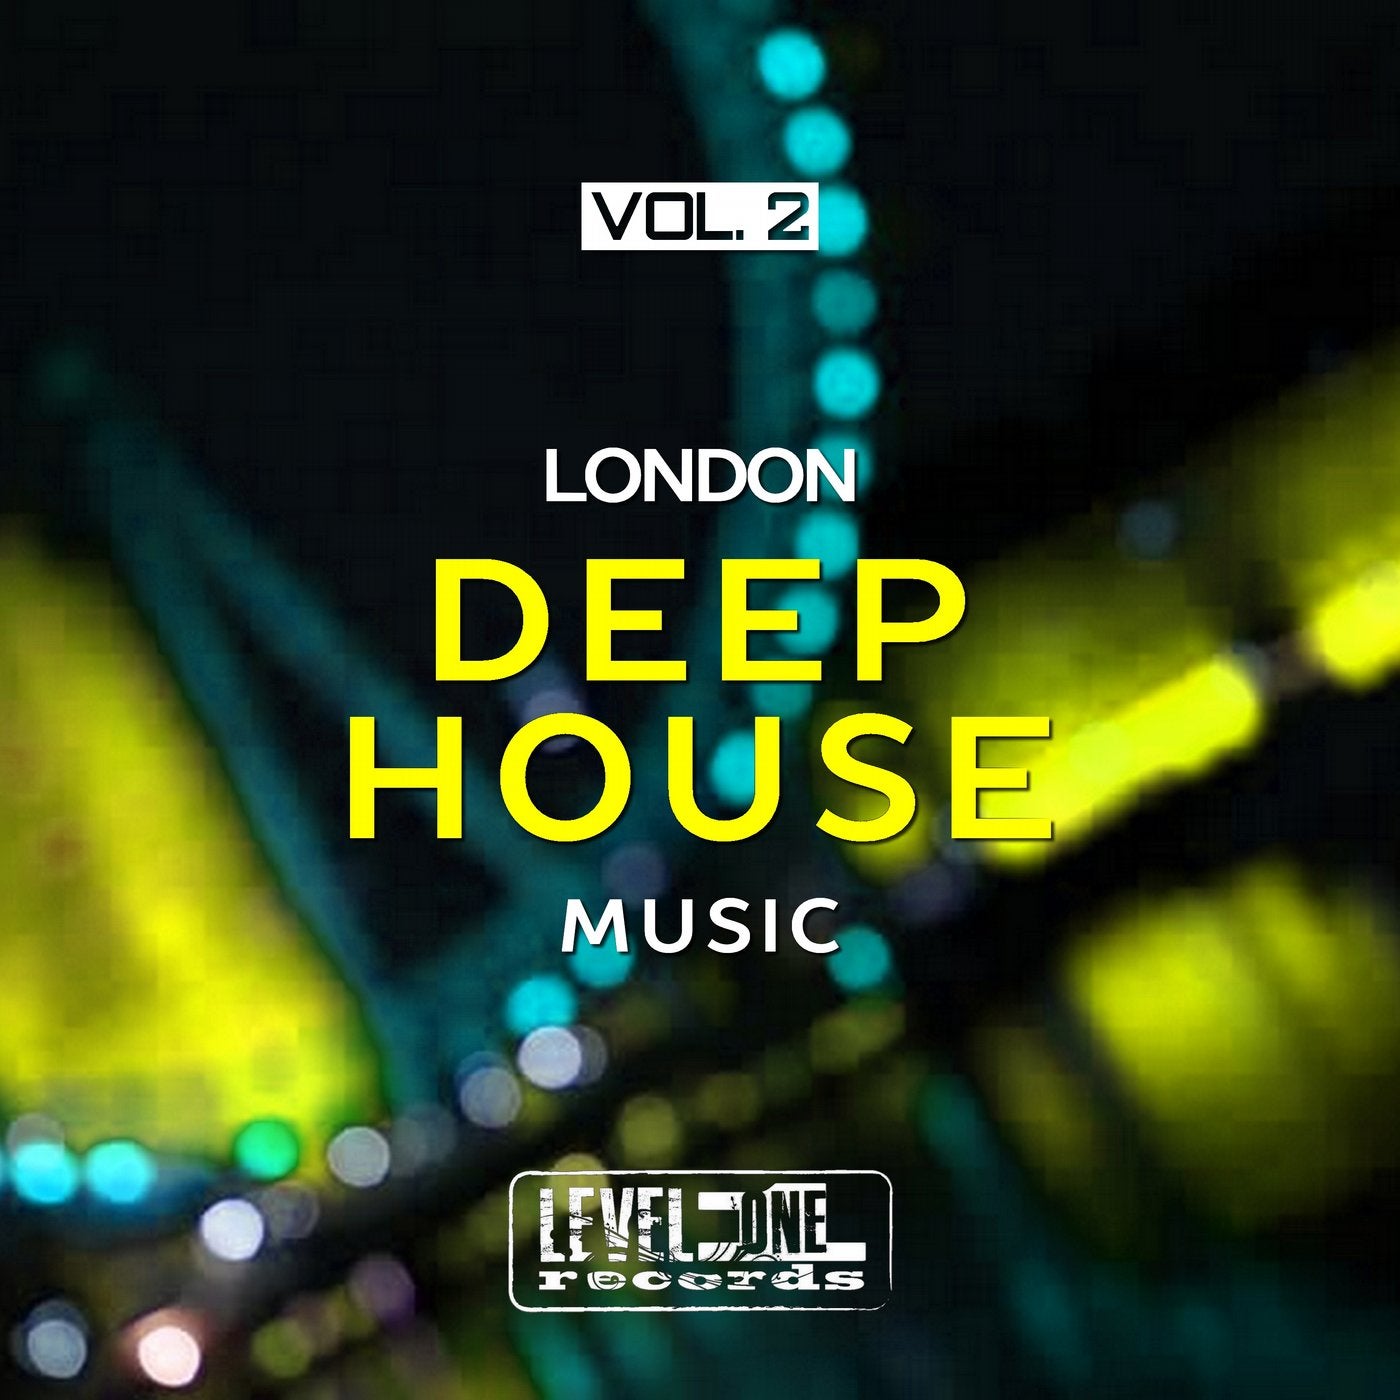 London Deep House Music, Vol. 2